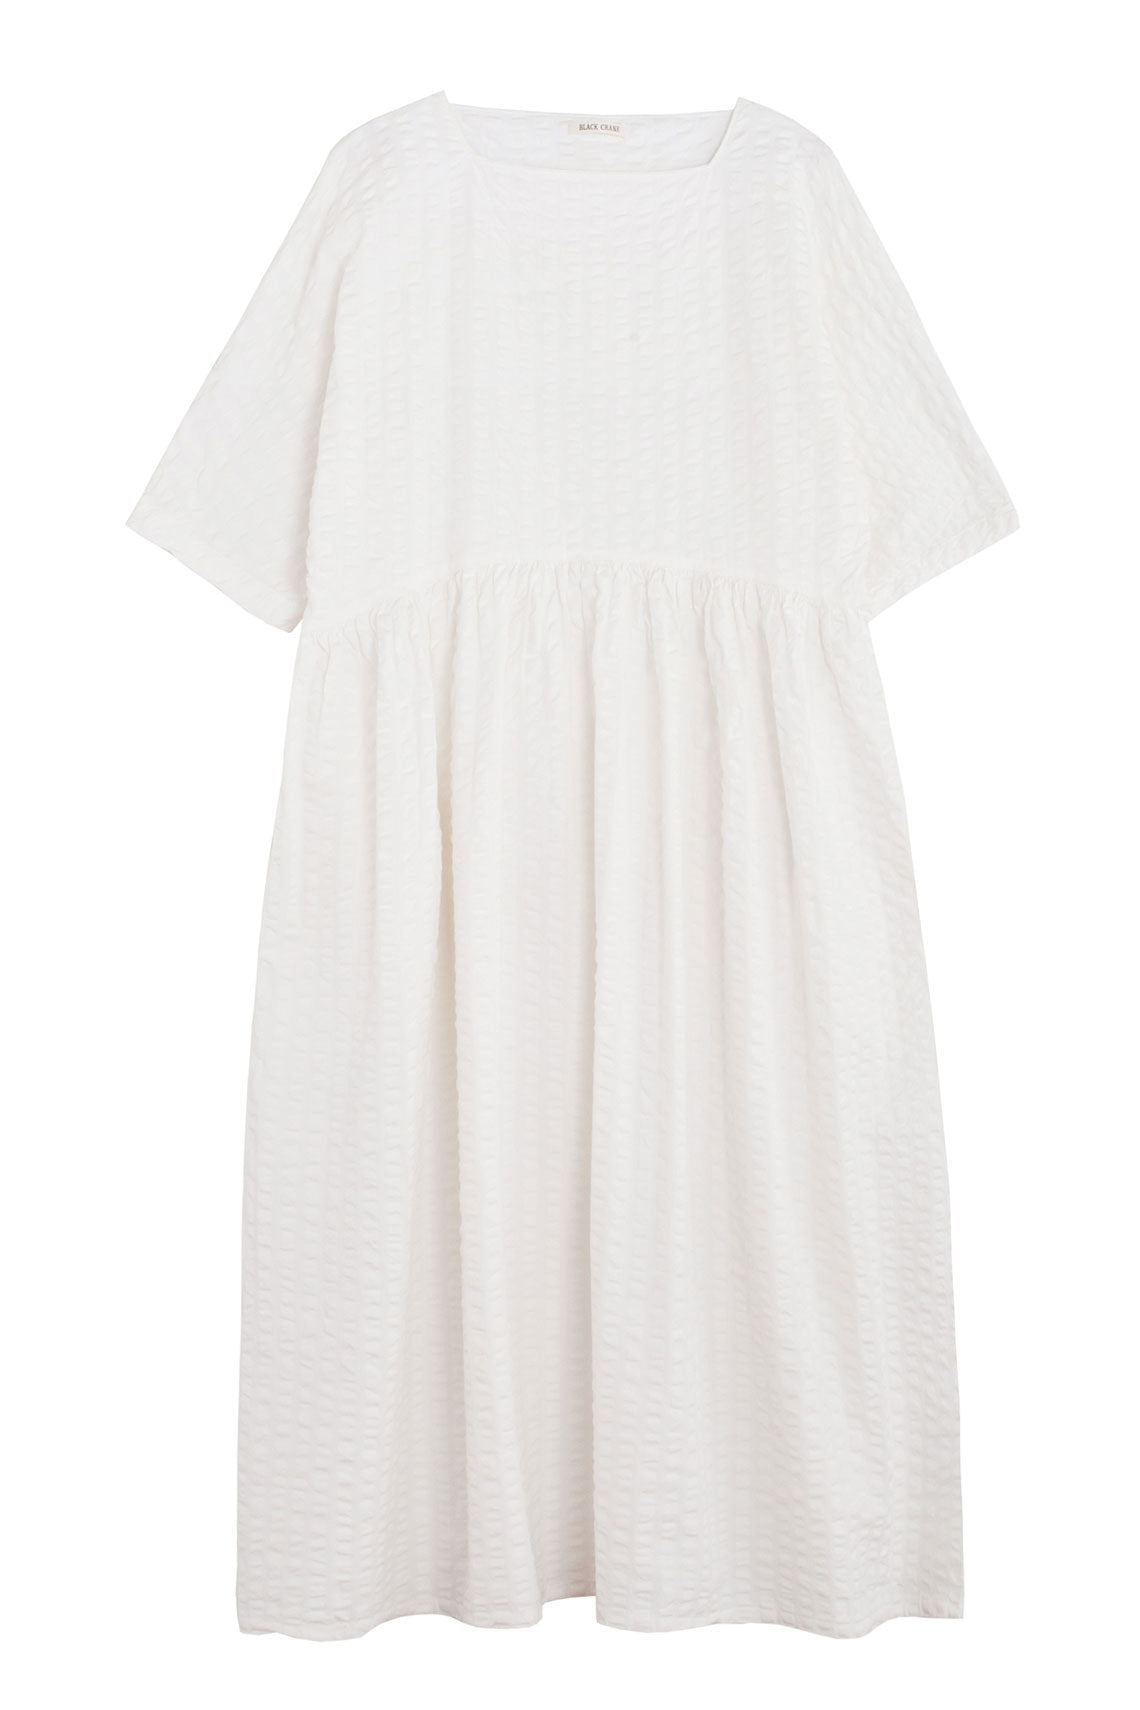 White Tradi Dress